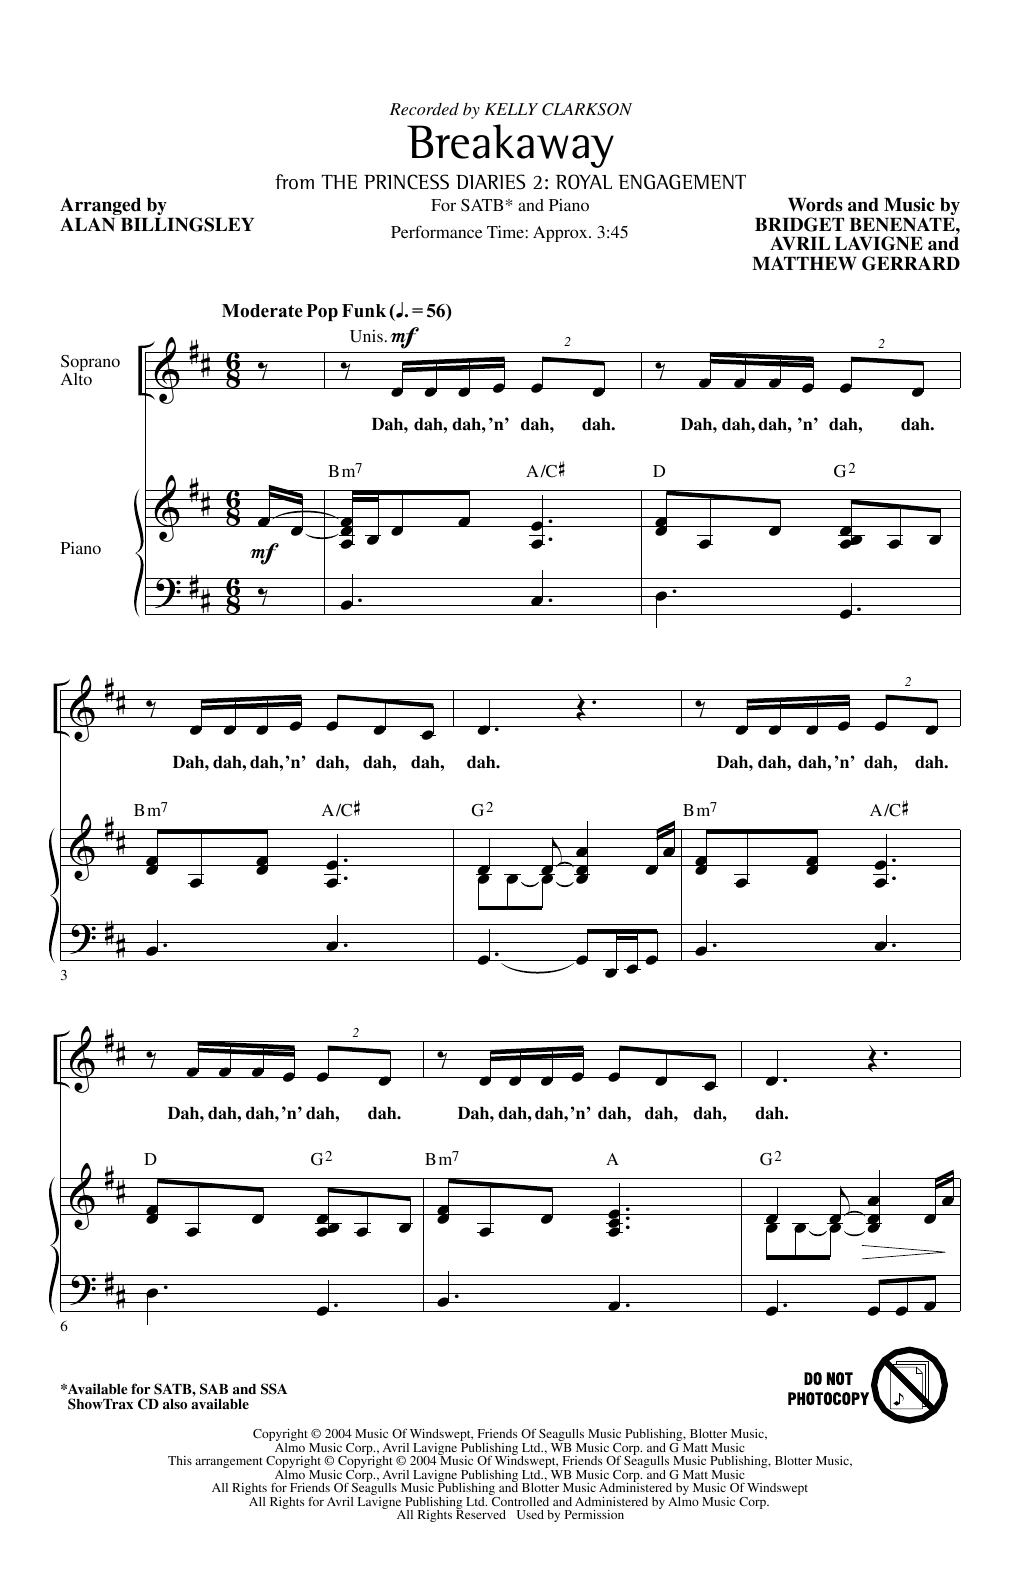 Download Kelly Clarkson Breakaway (arr. Alan Billingsley) Sheet Music and learn how to play SSA Choir PDF digital score in minutes